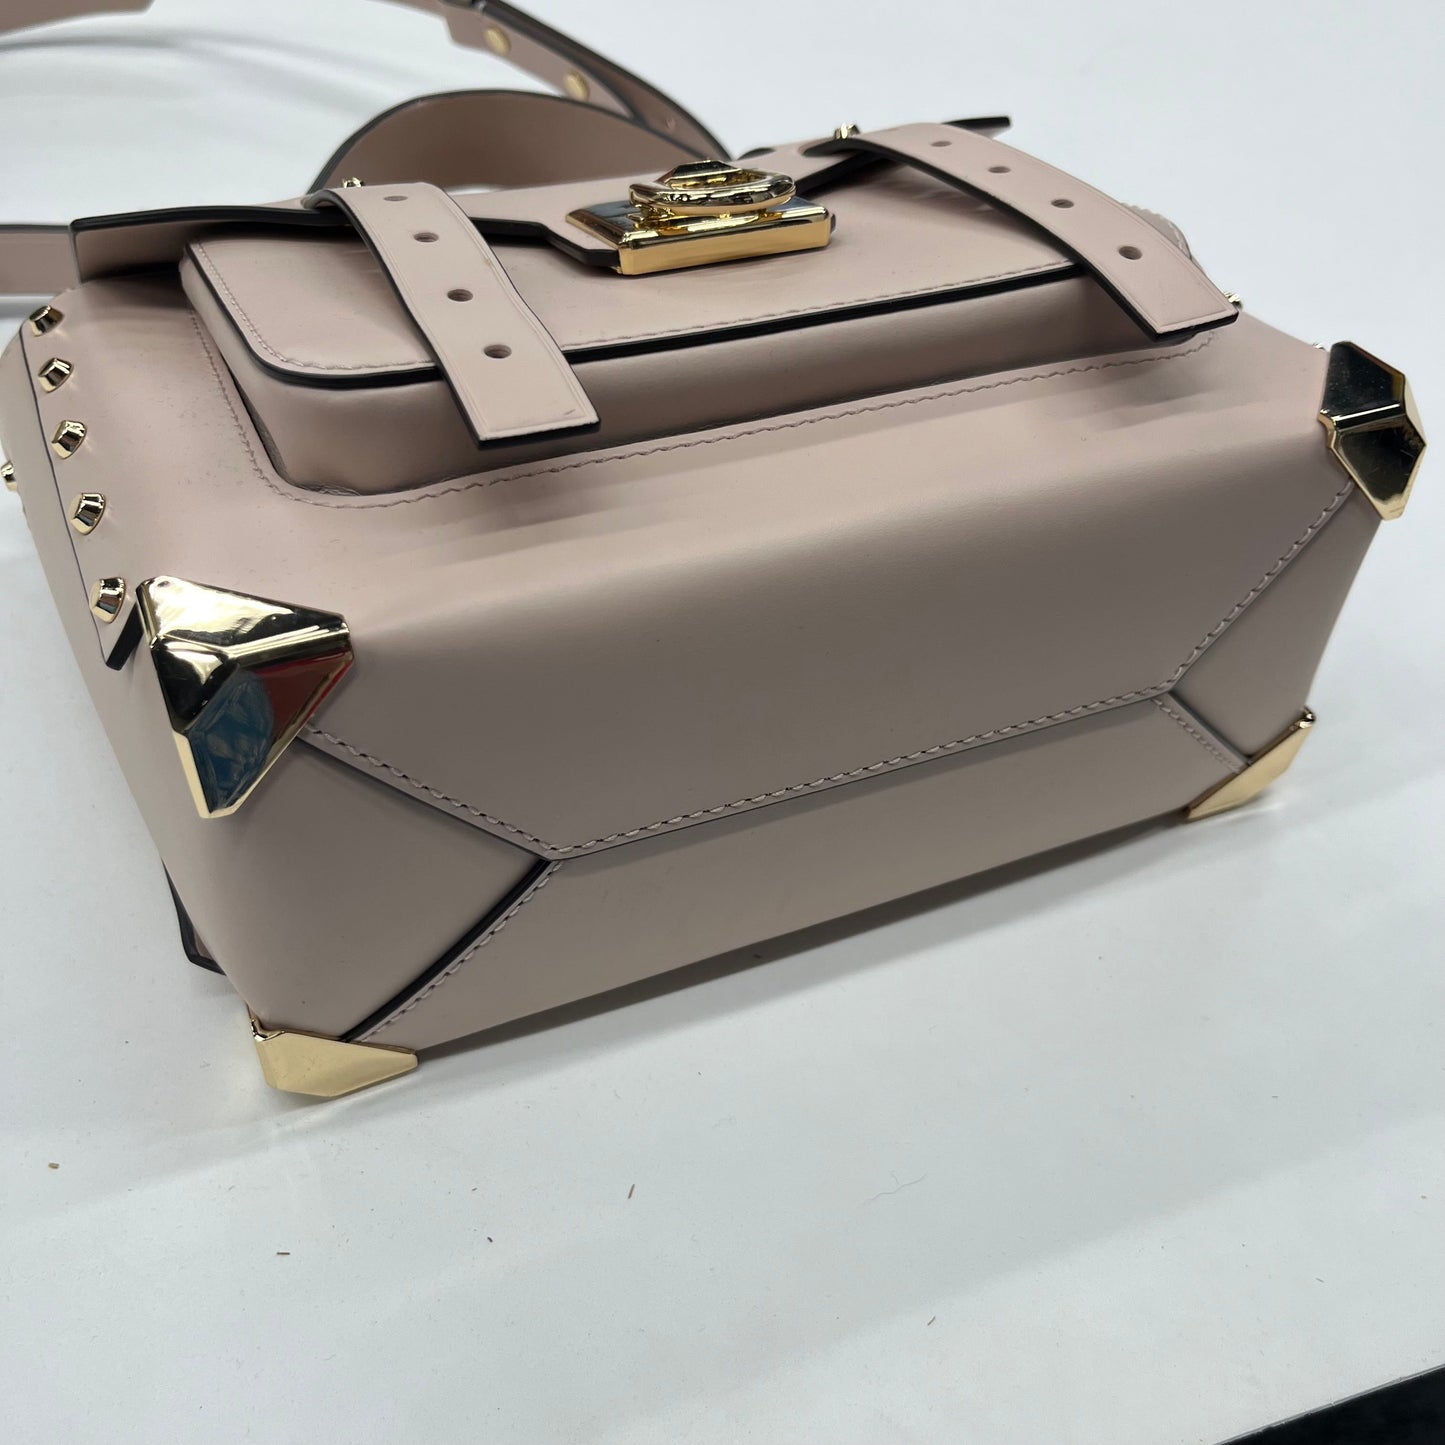 Handbag Designer Michael Kors, Size Small